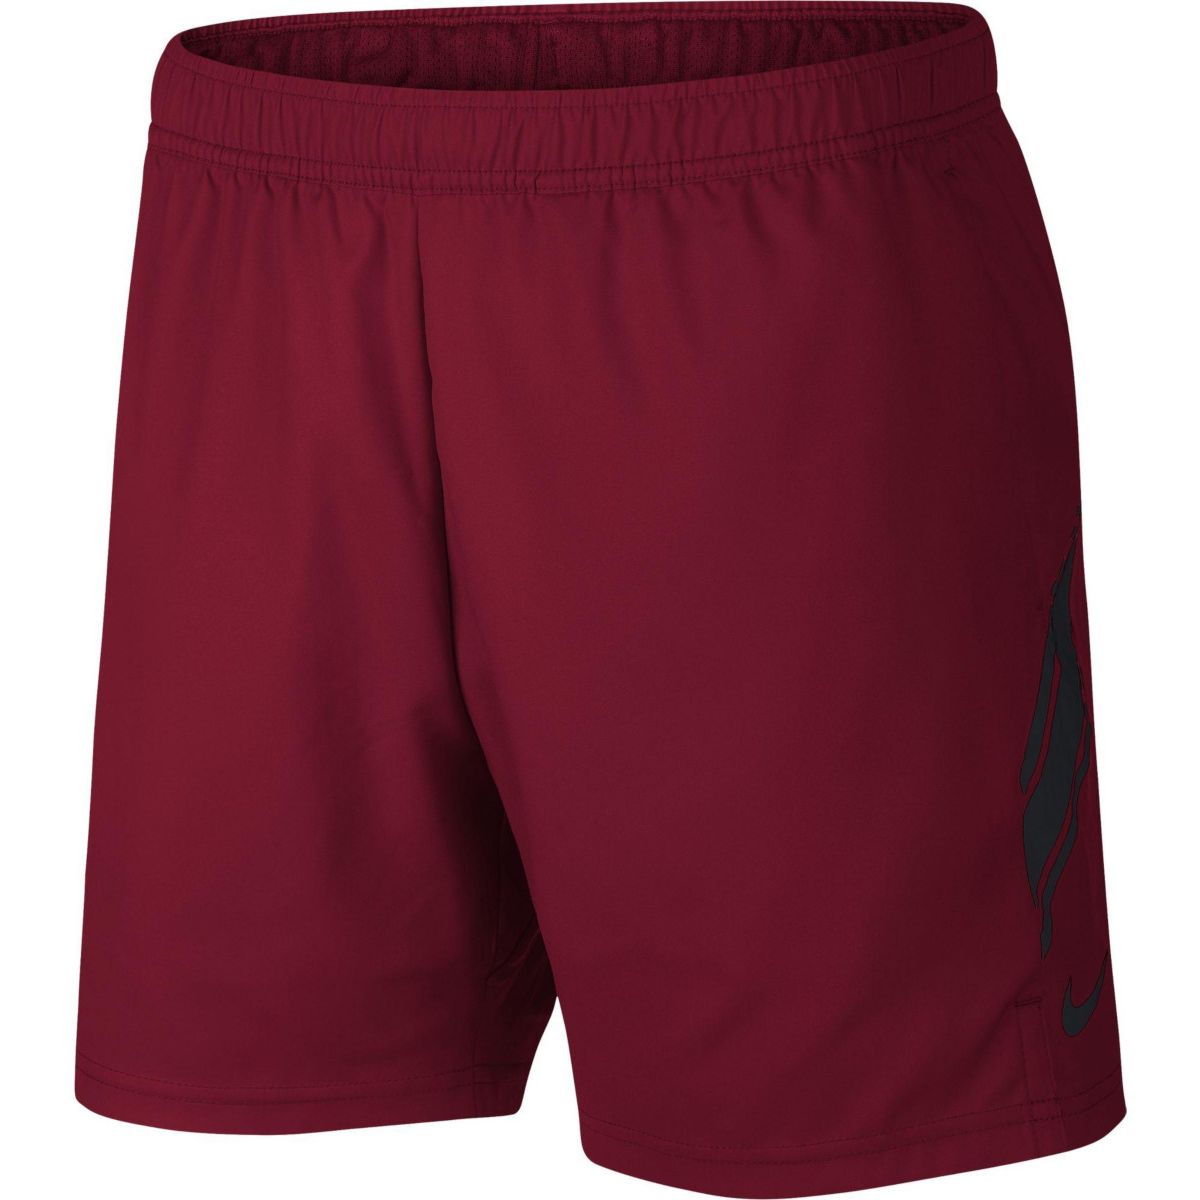 NikeCourt Dry 7-Inch Men's Tennis Shorts 939273-613